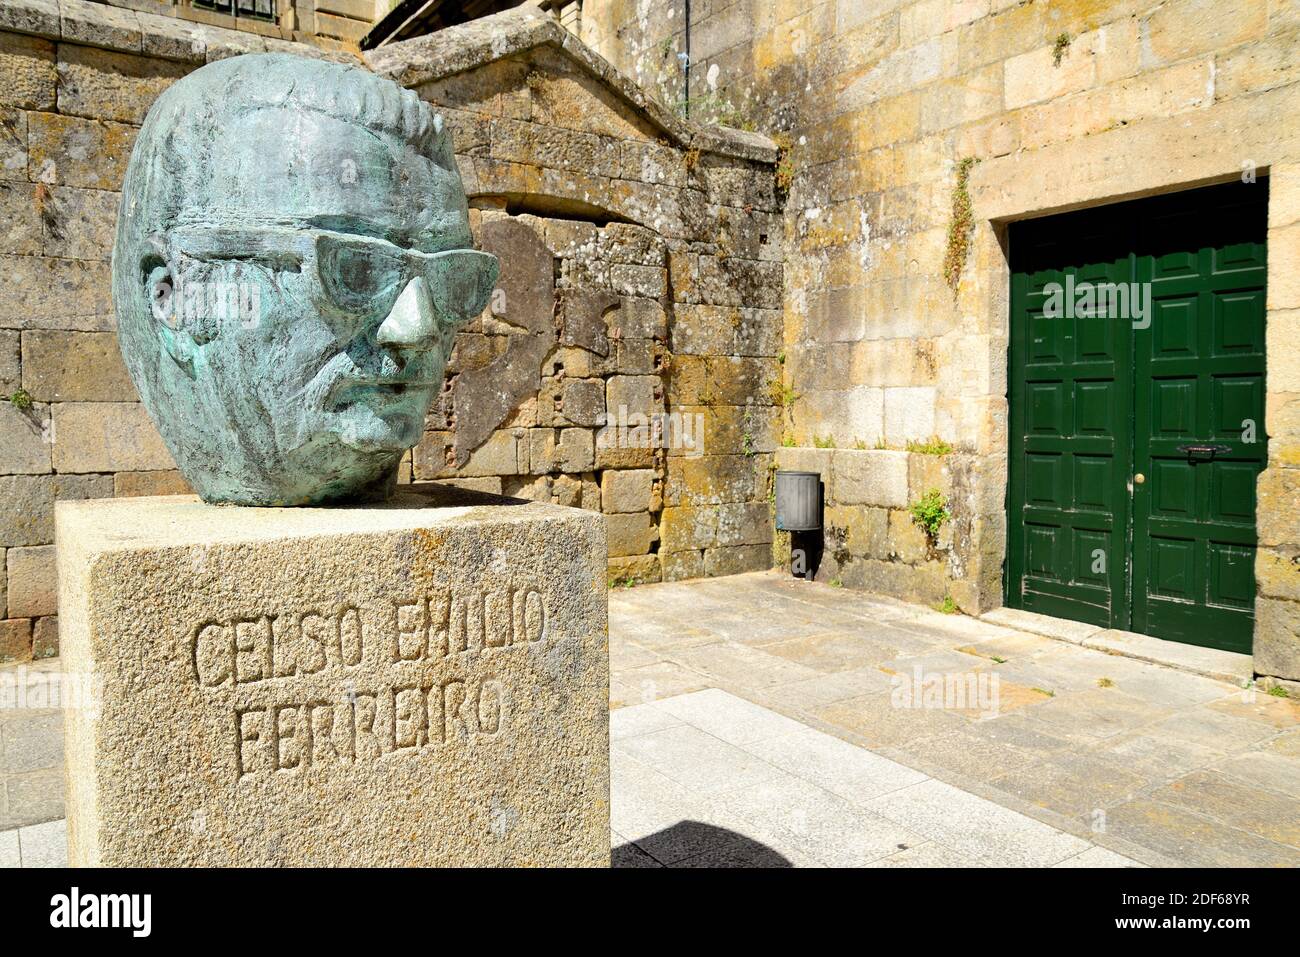 Bust of Celso Emilio Ferreiro in Main square of Celanova, Orense, Spain Stock Photo